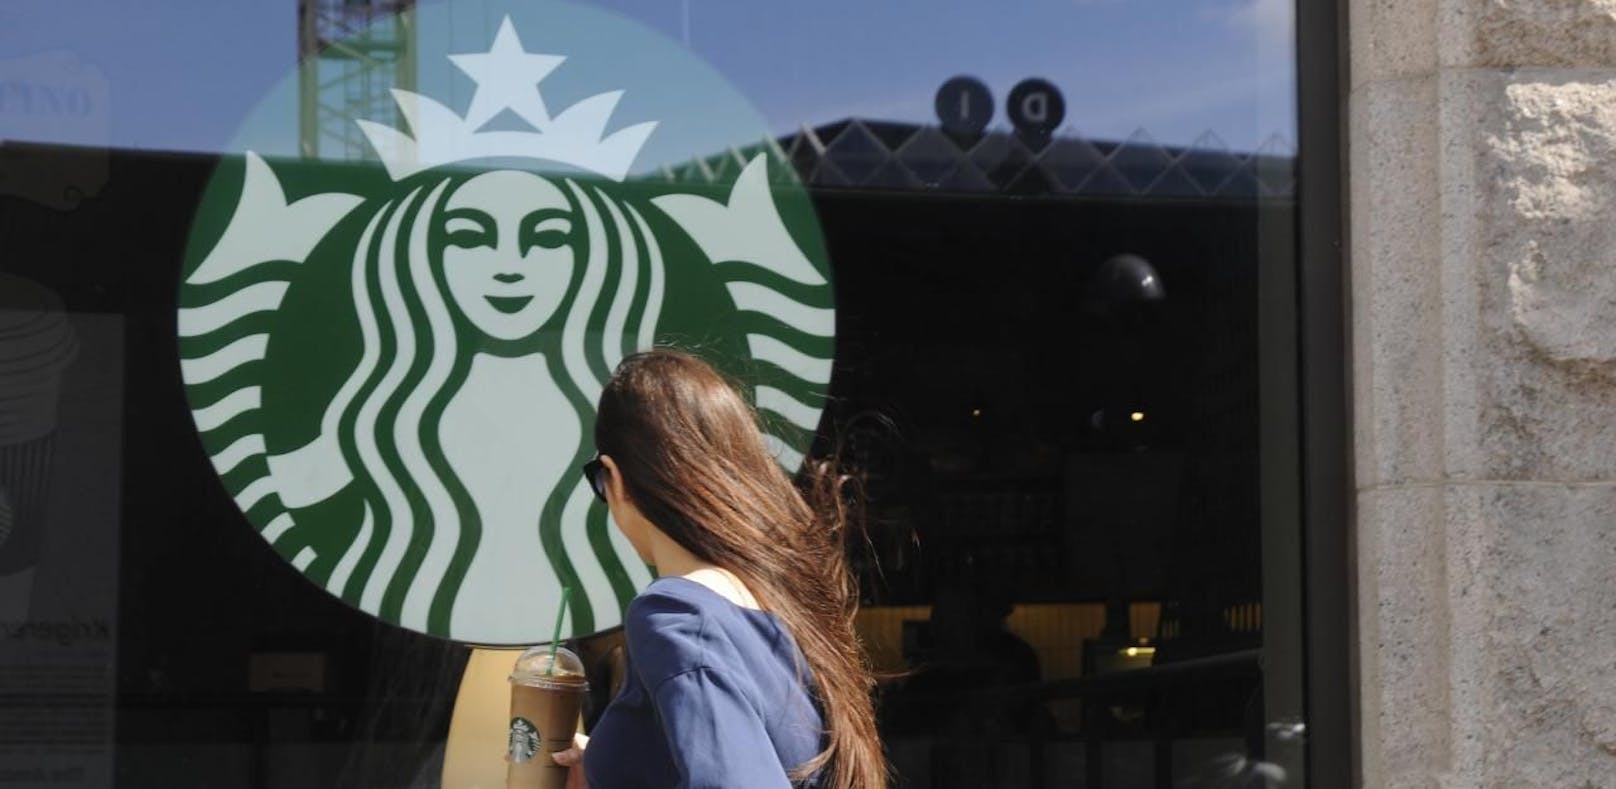 Starbucks-Mitarbeiter beleidigt Stotterer